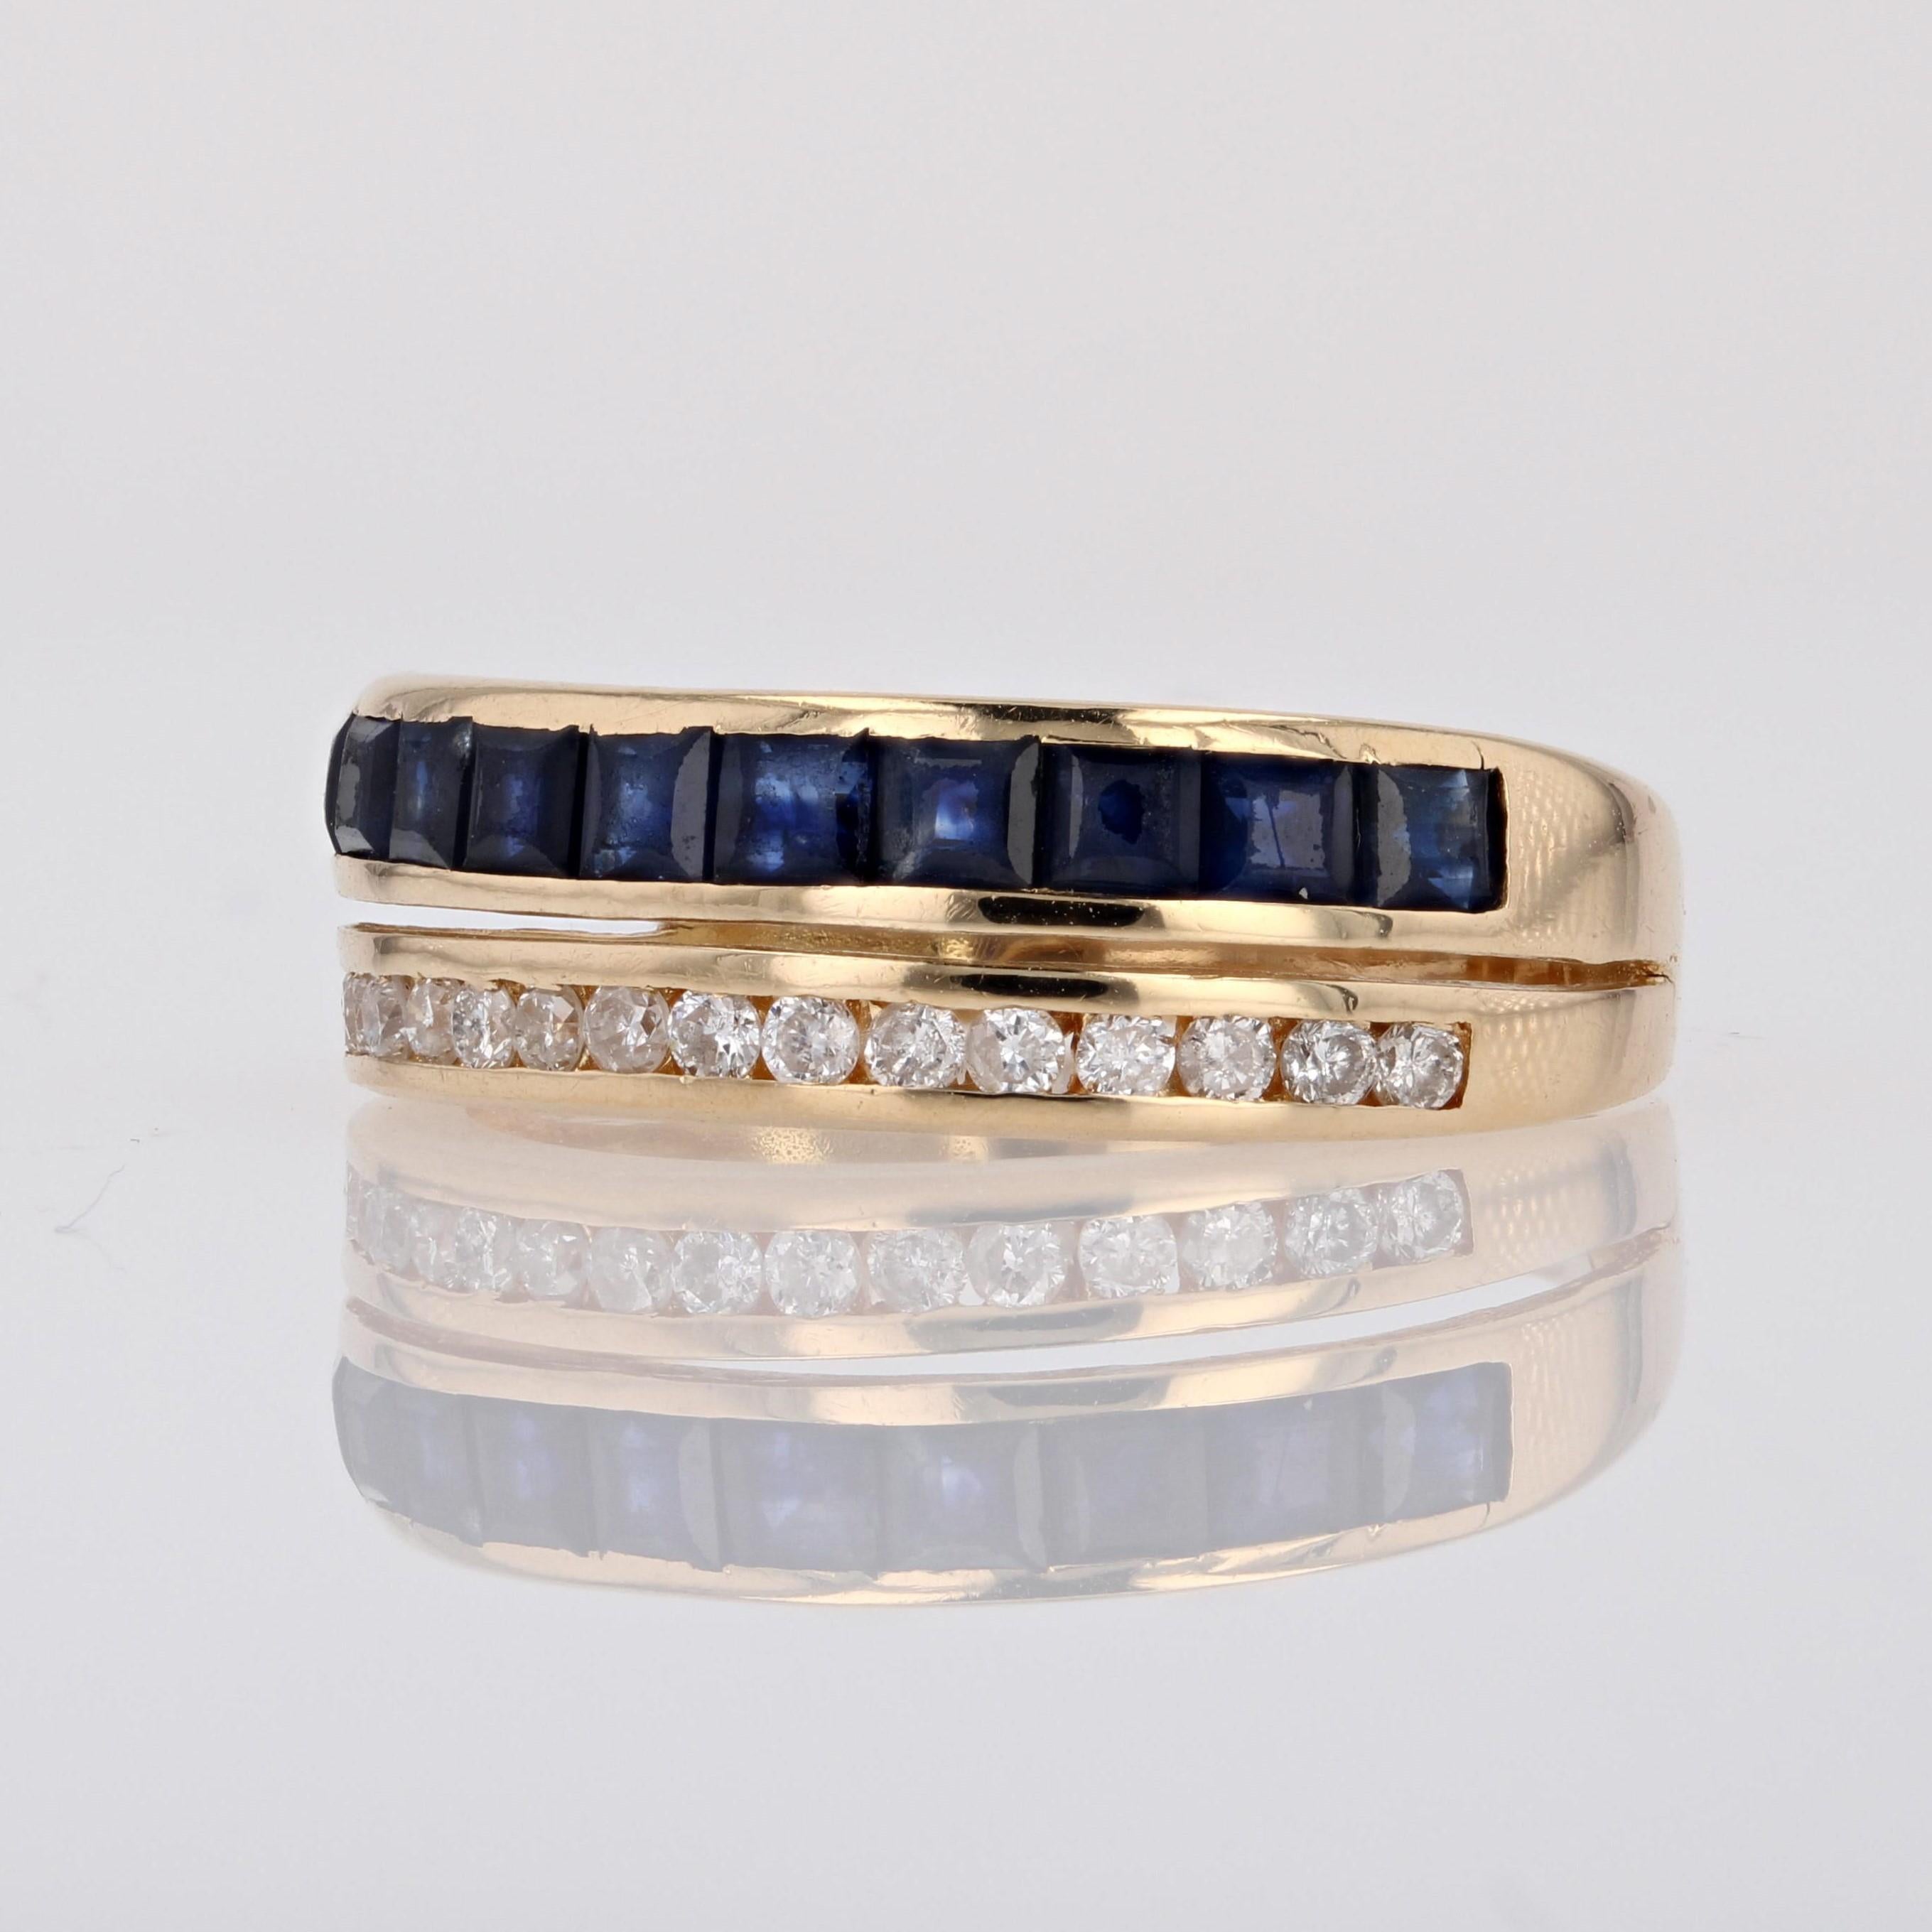 Brilliant Cut Modern Calibrated Sapphires Diamonds 18 Karat Yellow Gold Bangle Ring